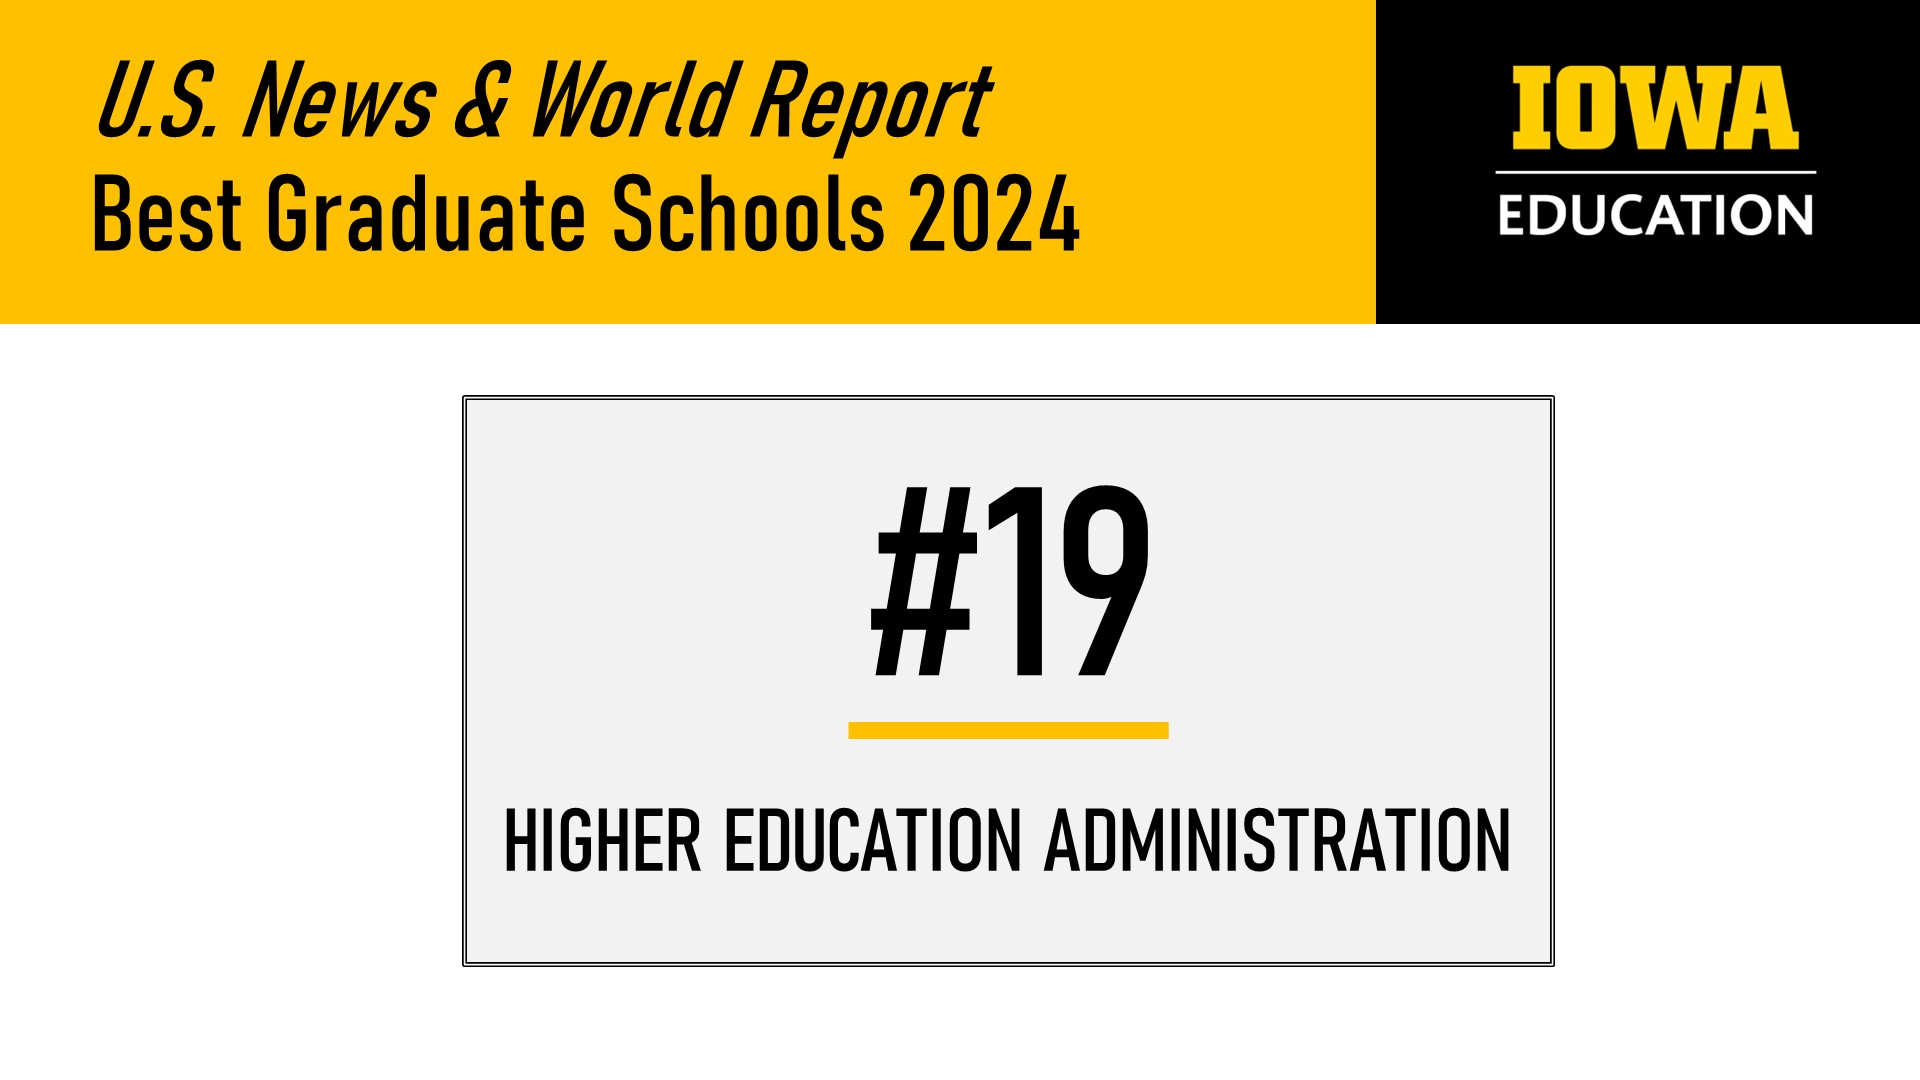 U.S. News & World Report Best Graduate Schools 2024. #19 Higher Education Administration